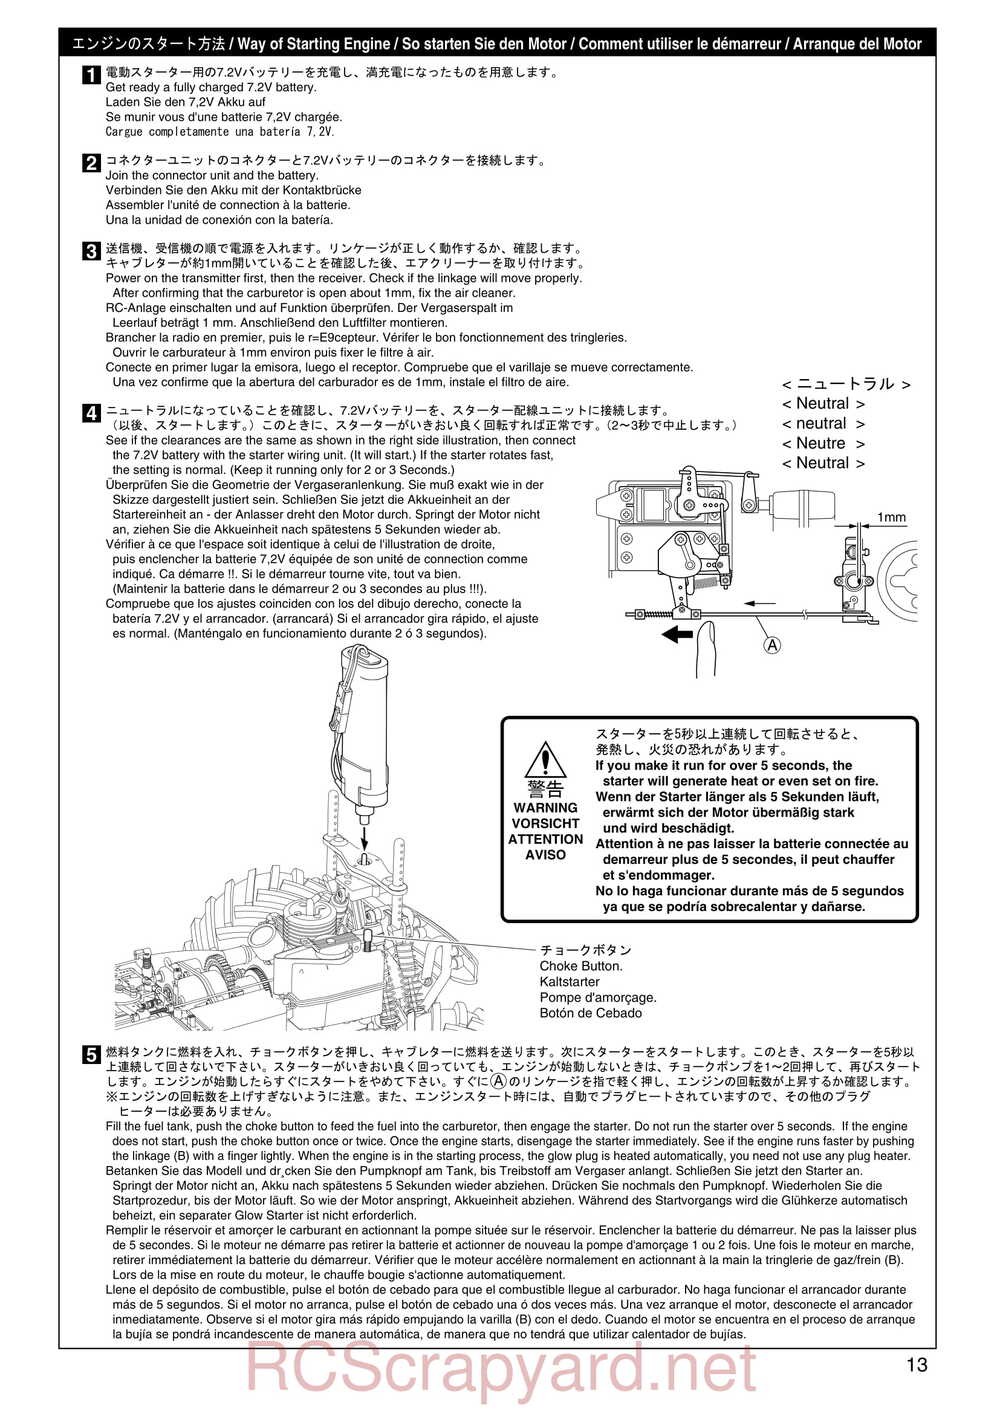 Kyosho - 31181 - Mega-Force - Manual - Page 13